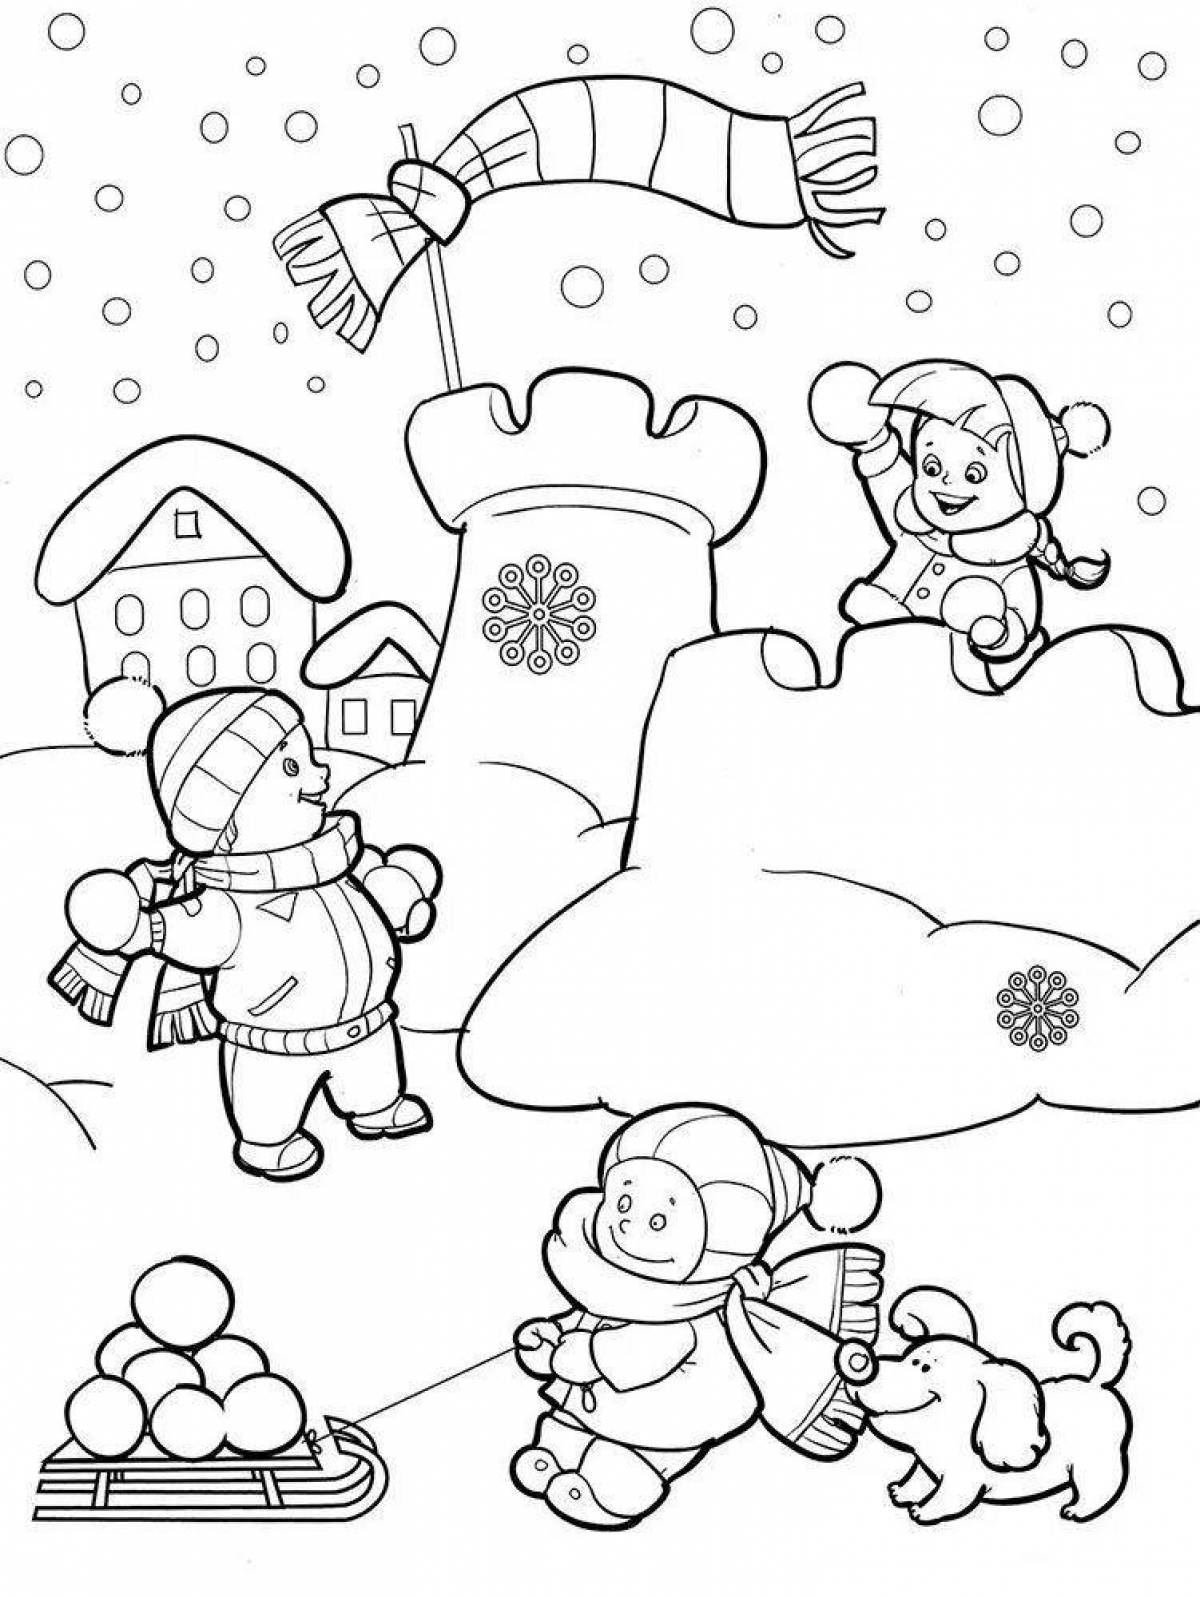 Tempting coloring drawing of winter fun